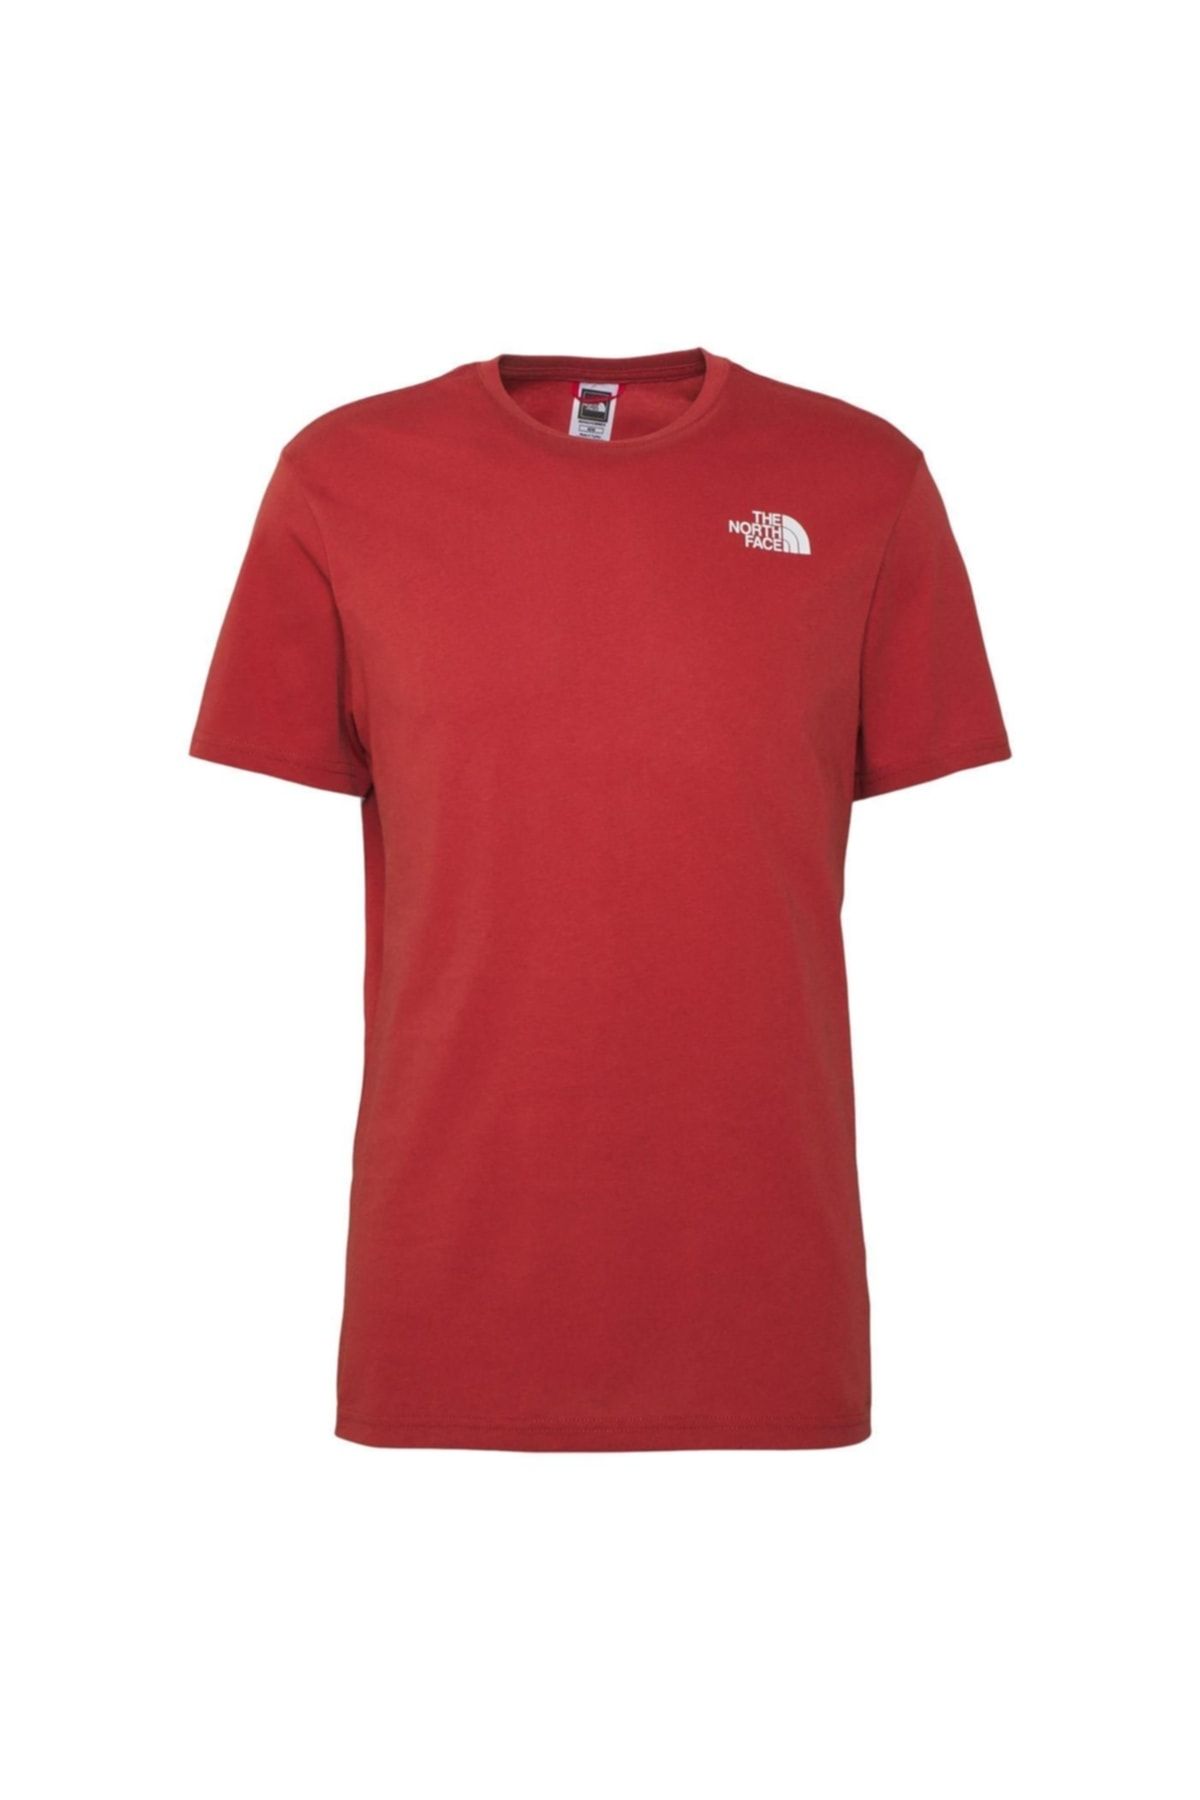 The North Face Redbox Tee Erkek T-shirt - Nf0a2tx2ubr